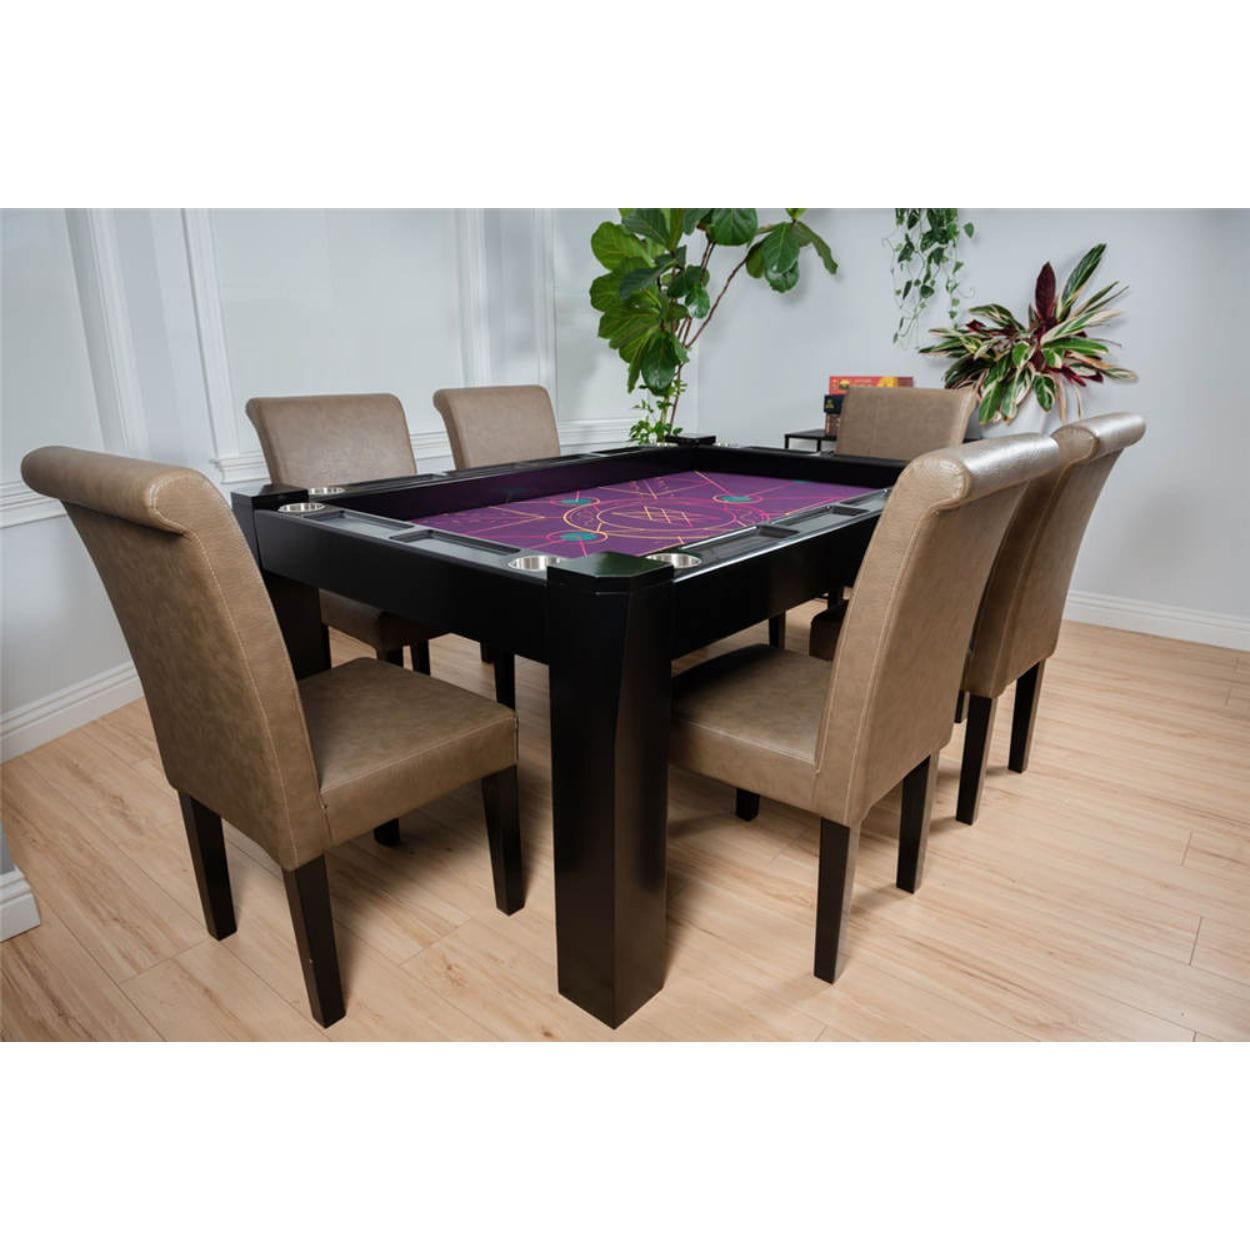 BBO Poker Tables The Origins Game Table